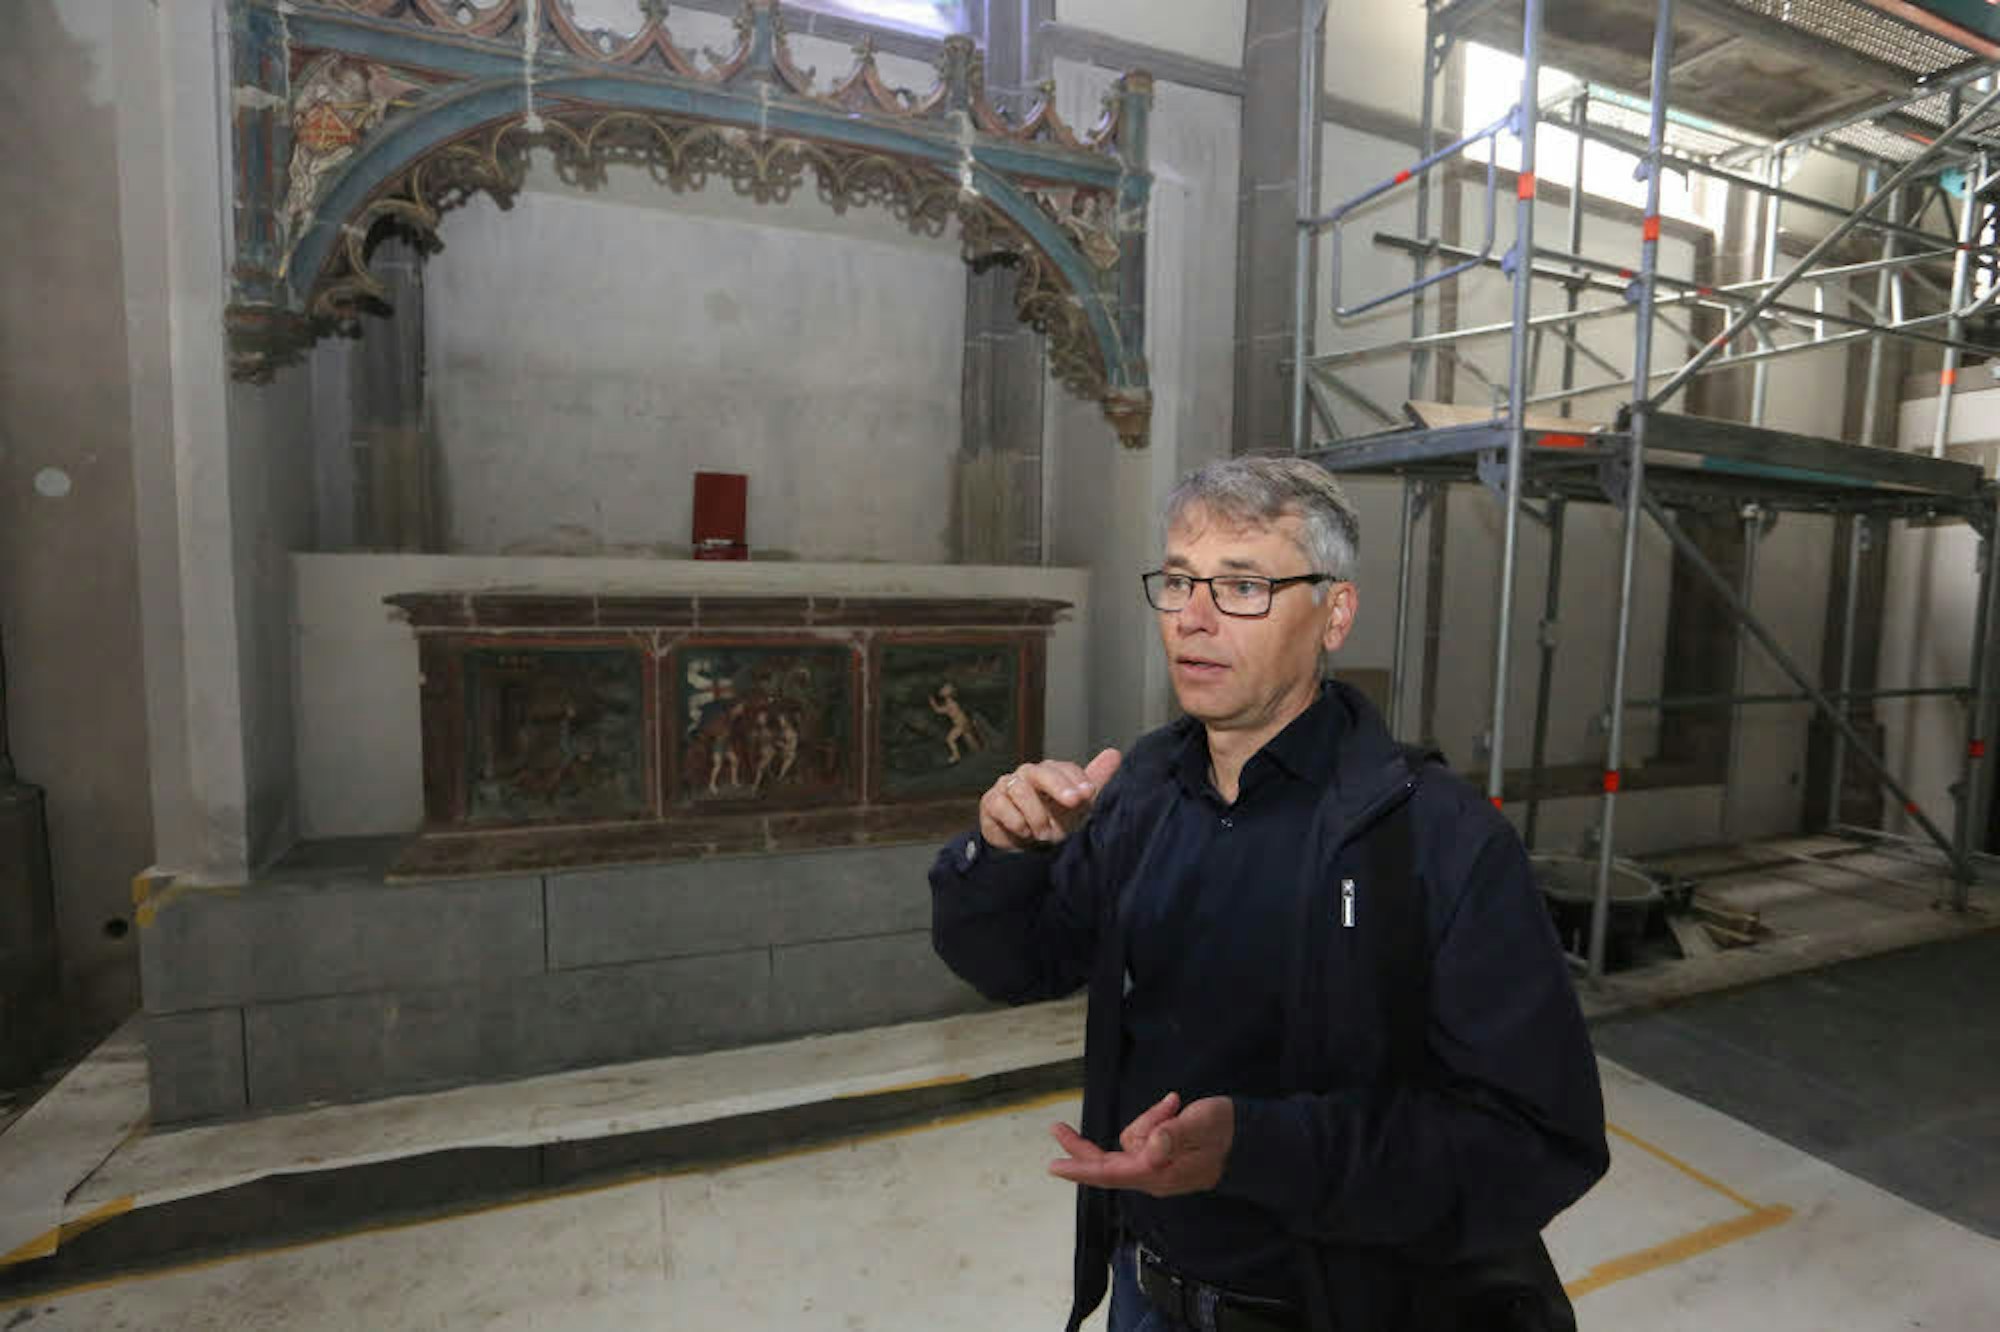 Architekt Christoph Füllenbach erläutert den neuen Standort der Grablegung.